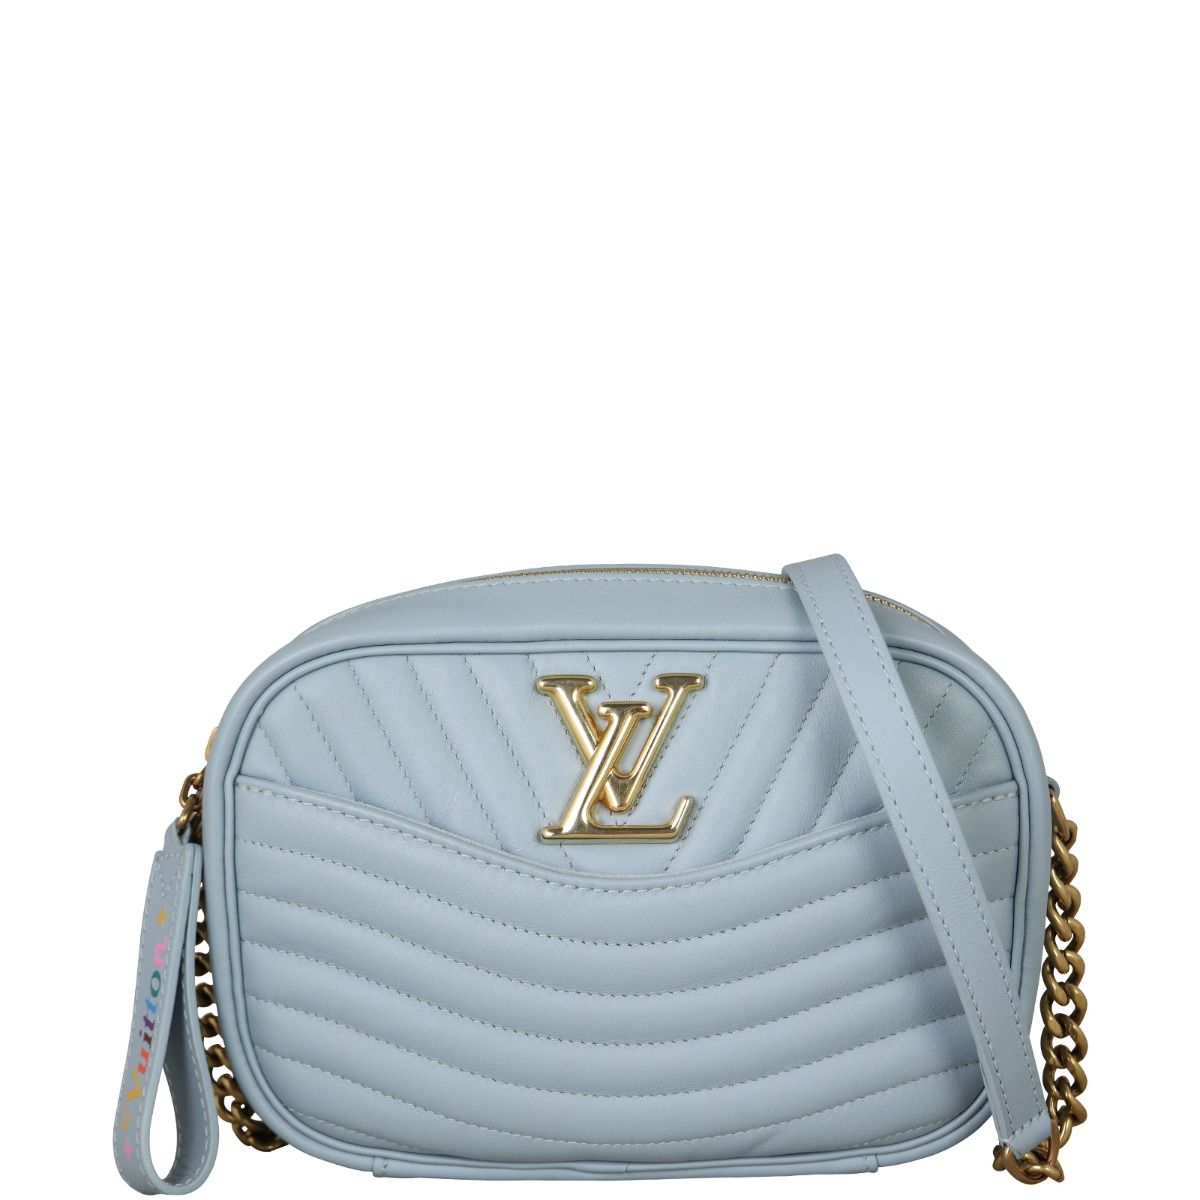 Louis Vuitton Louis Vuitton New Wave Camera Bag